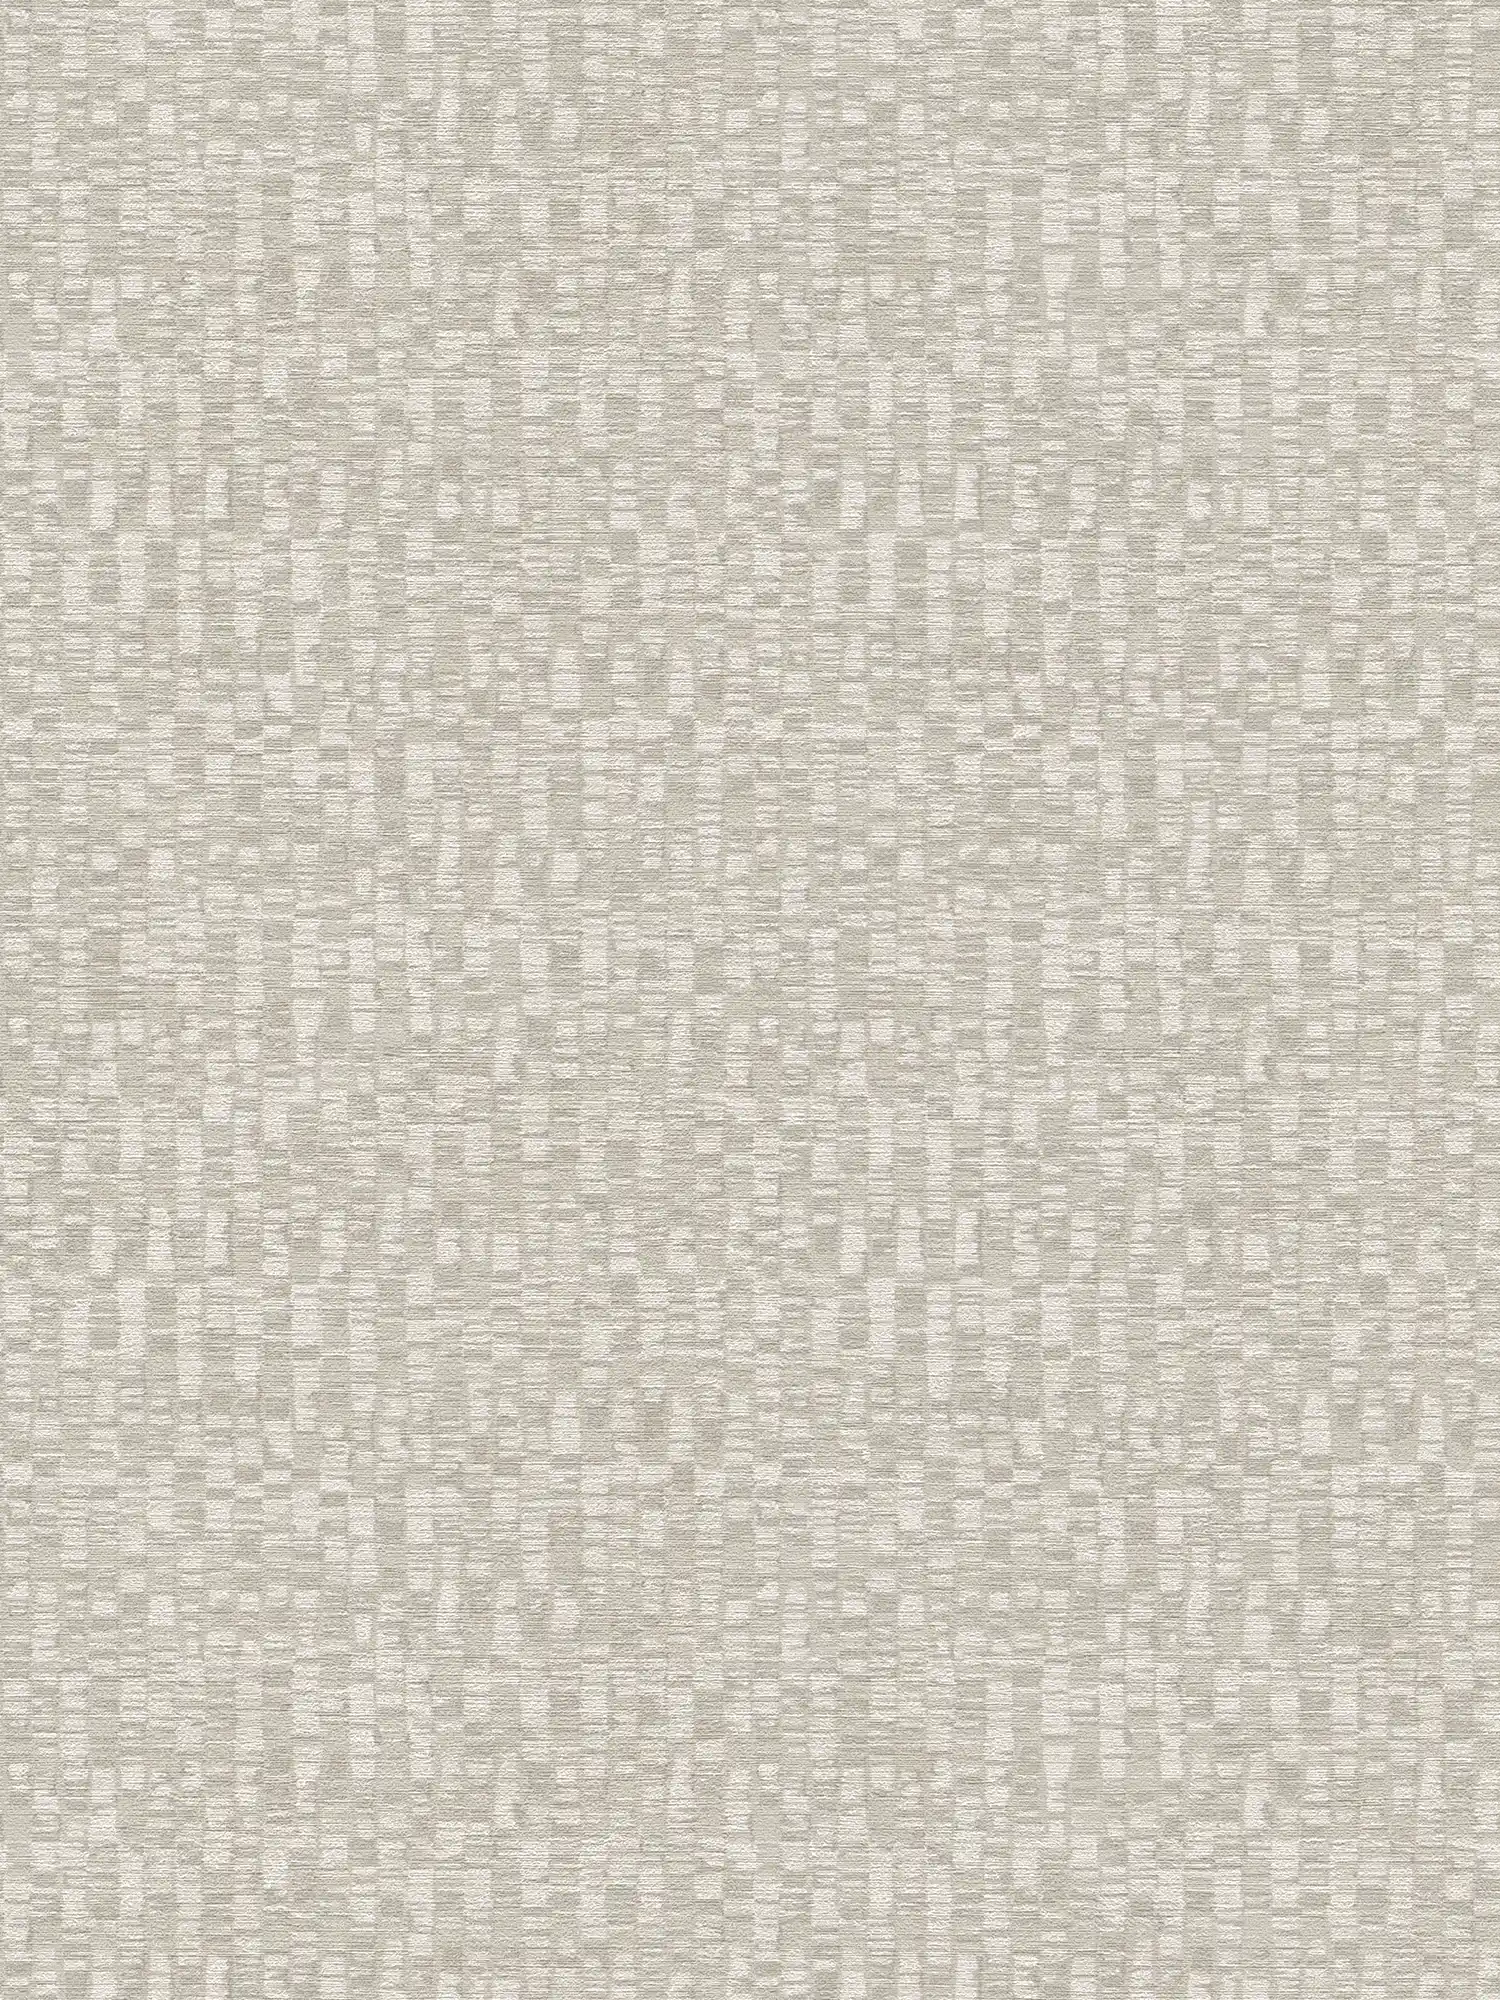 Papel pintado no tejido de aspecto liso - gris, blanco
